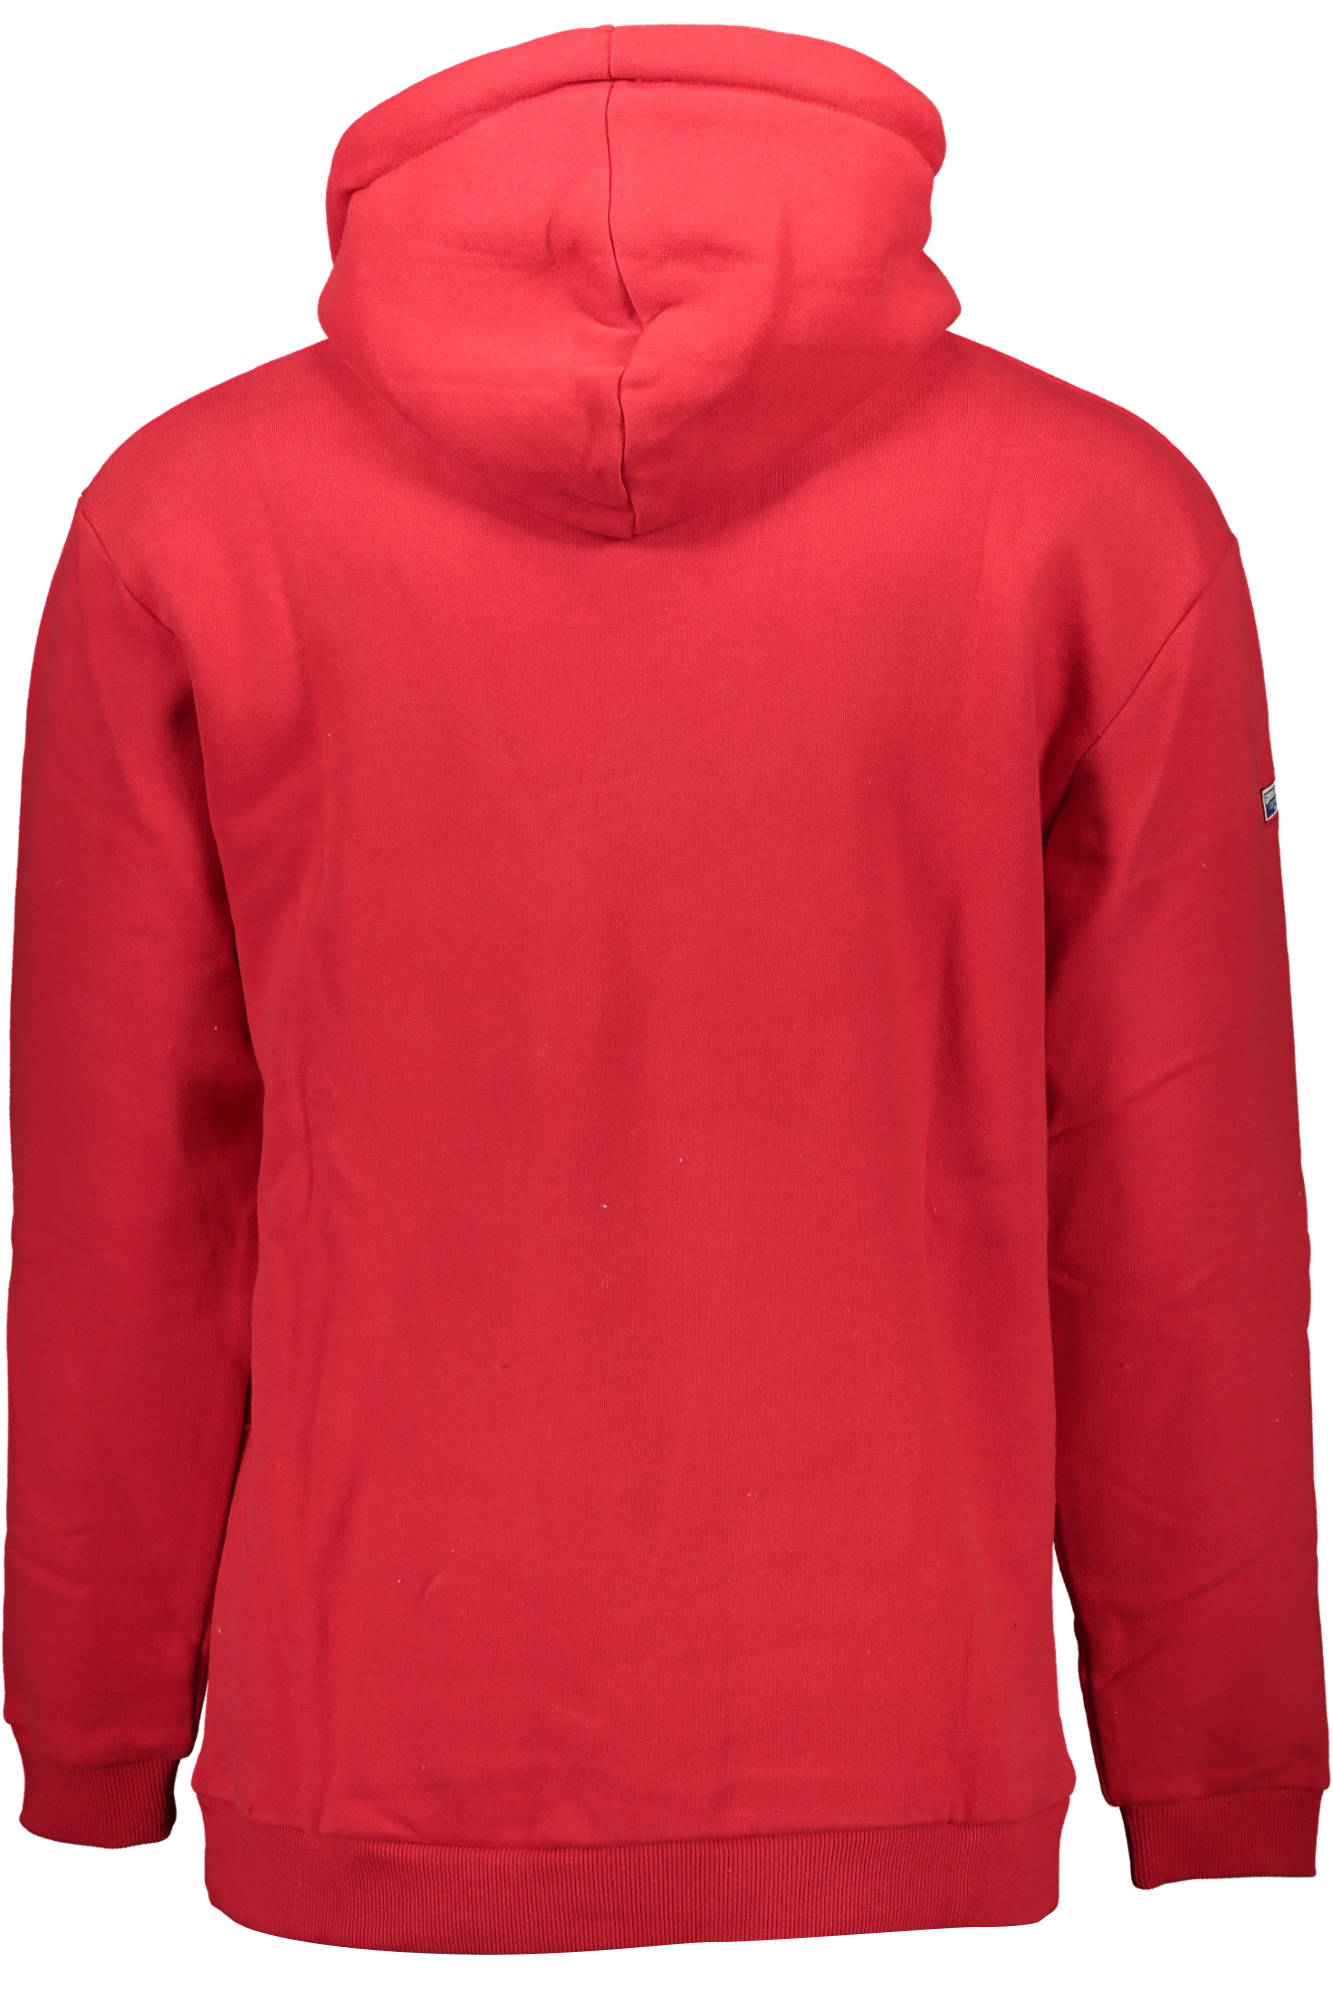 Superdry Red Sweater - Fizigo